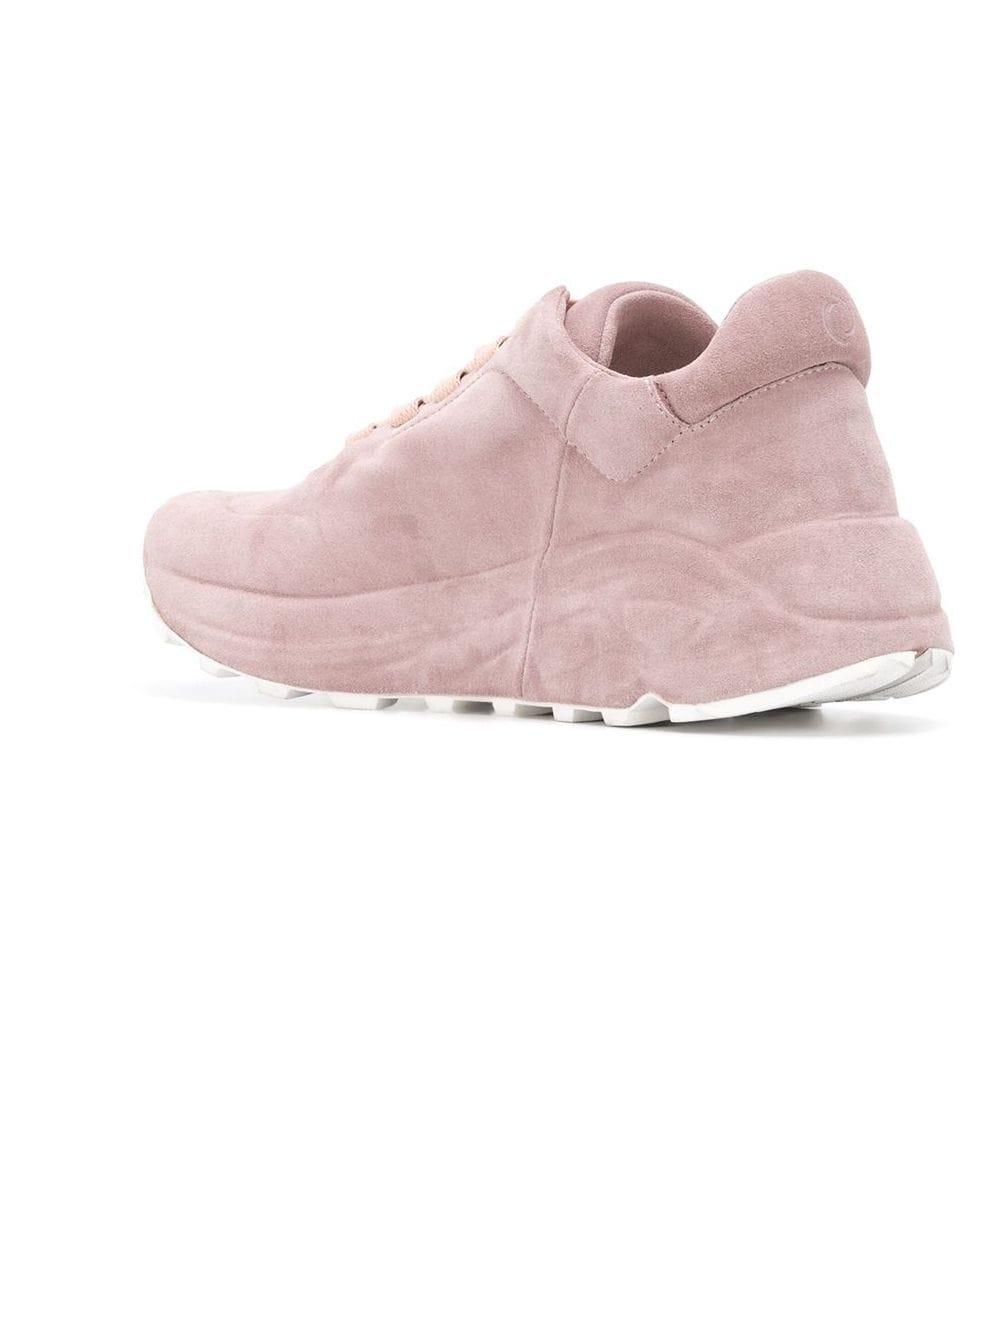 Roberto Del Carlo Leather De Carlo Sneakers in Pink - Lyst